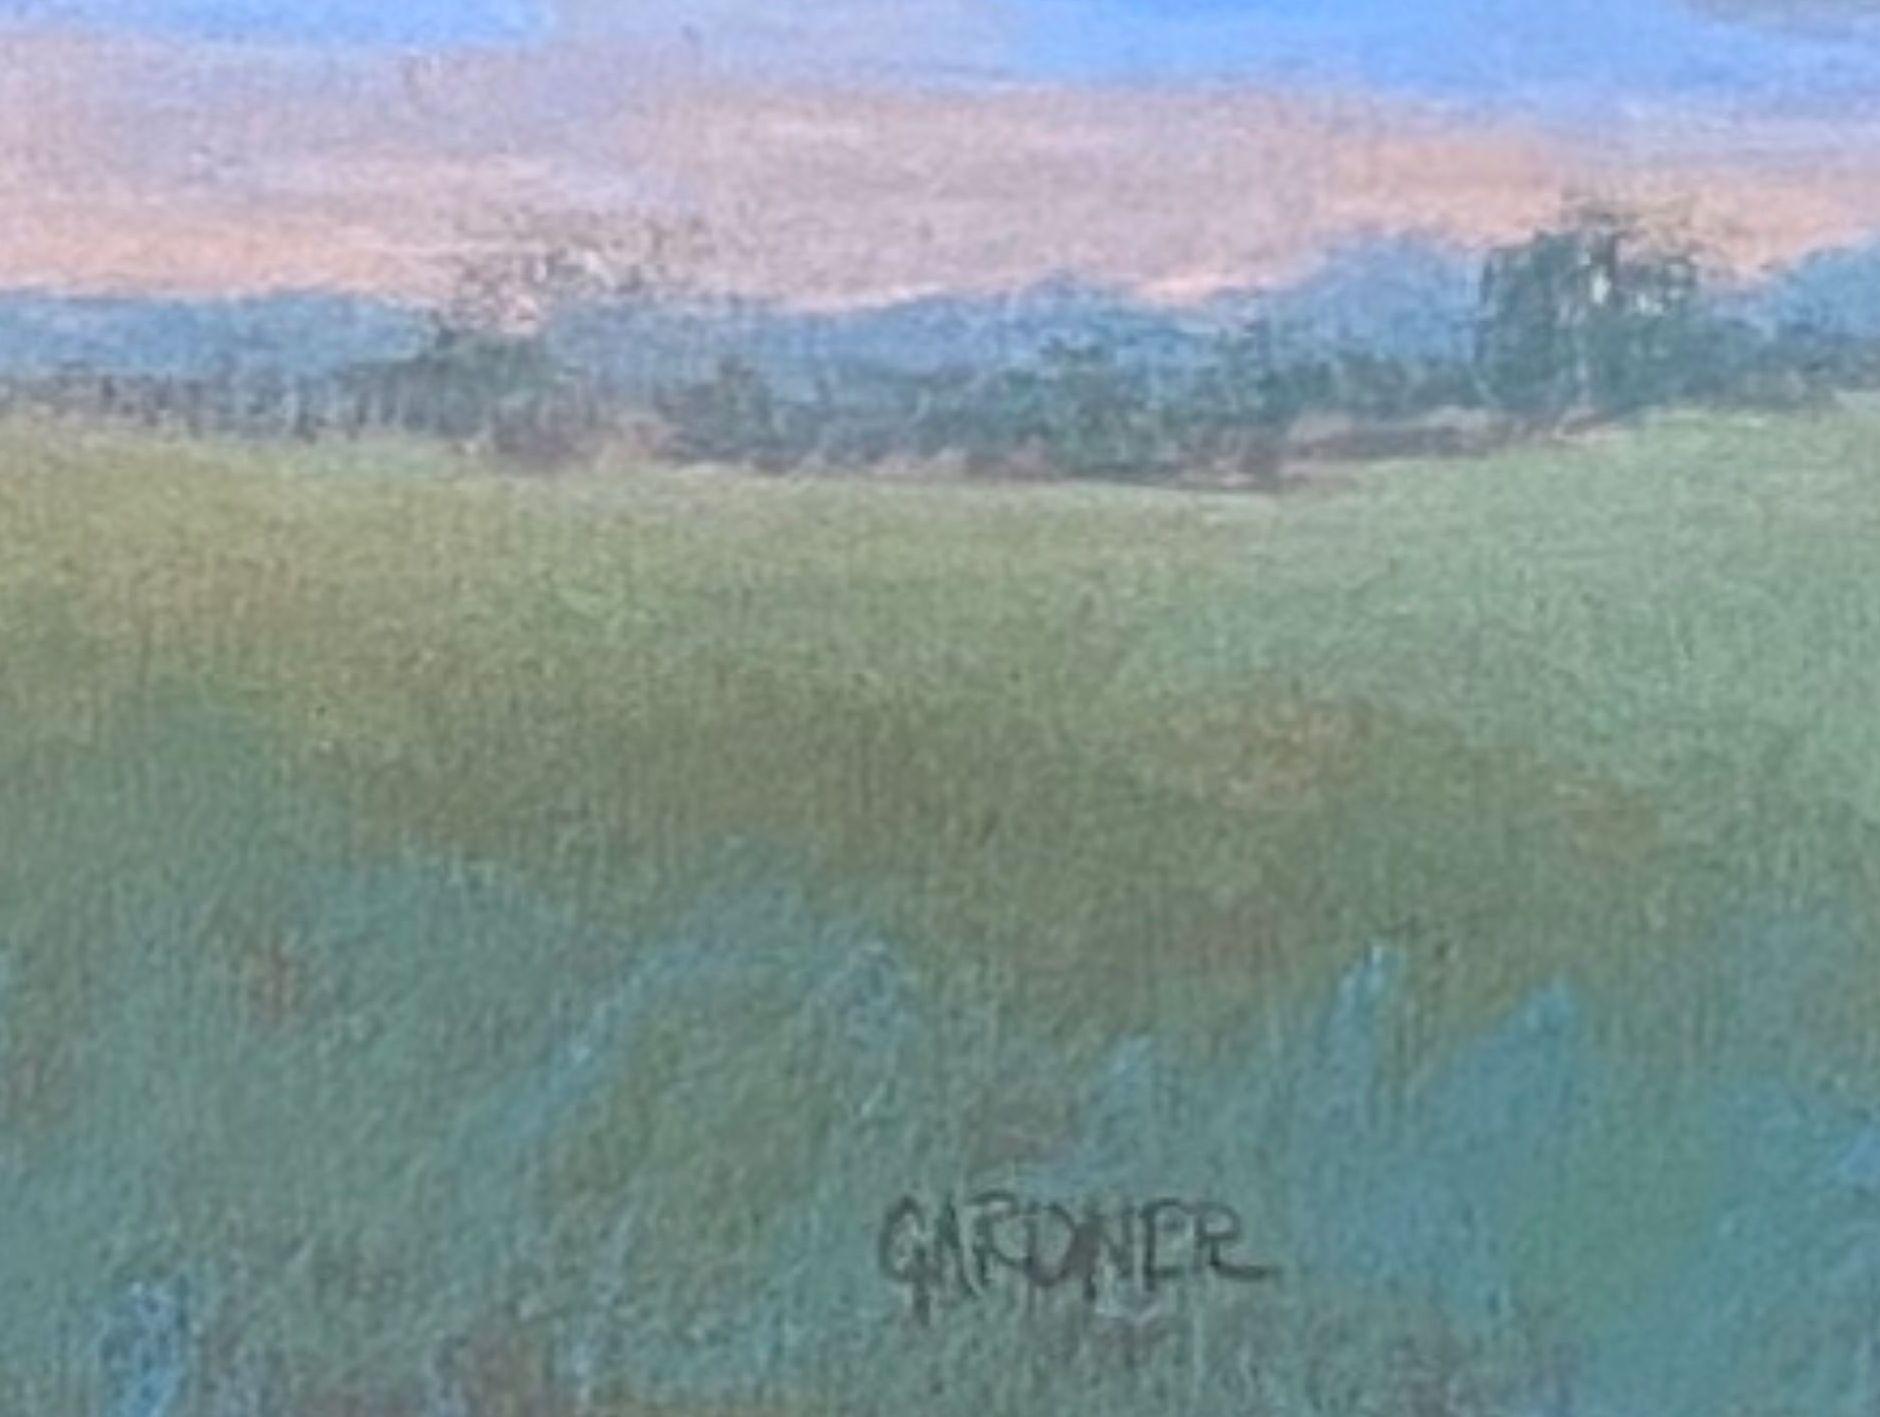 Saving Grace, Original Contemporary Impressionist Landscape Painting, 2020
12